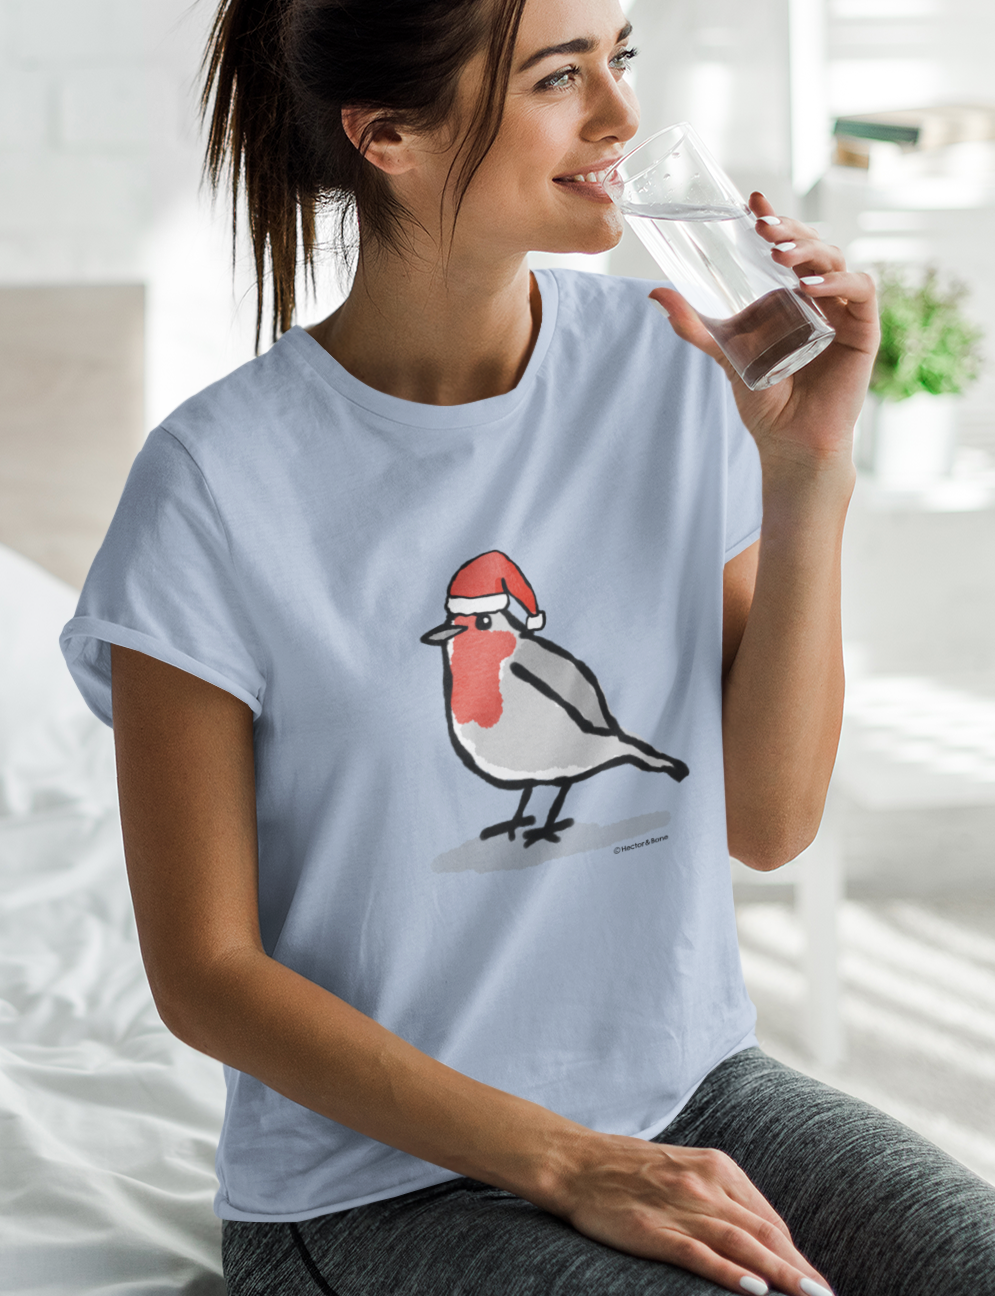 Santa Robin T-shirt - Illustrated Vegan Cotton Christmas T-Shirts